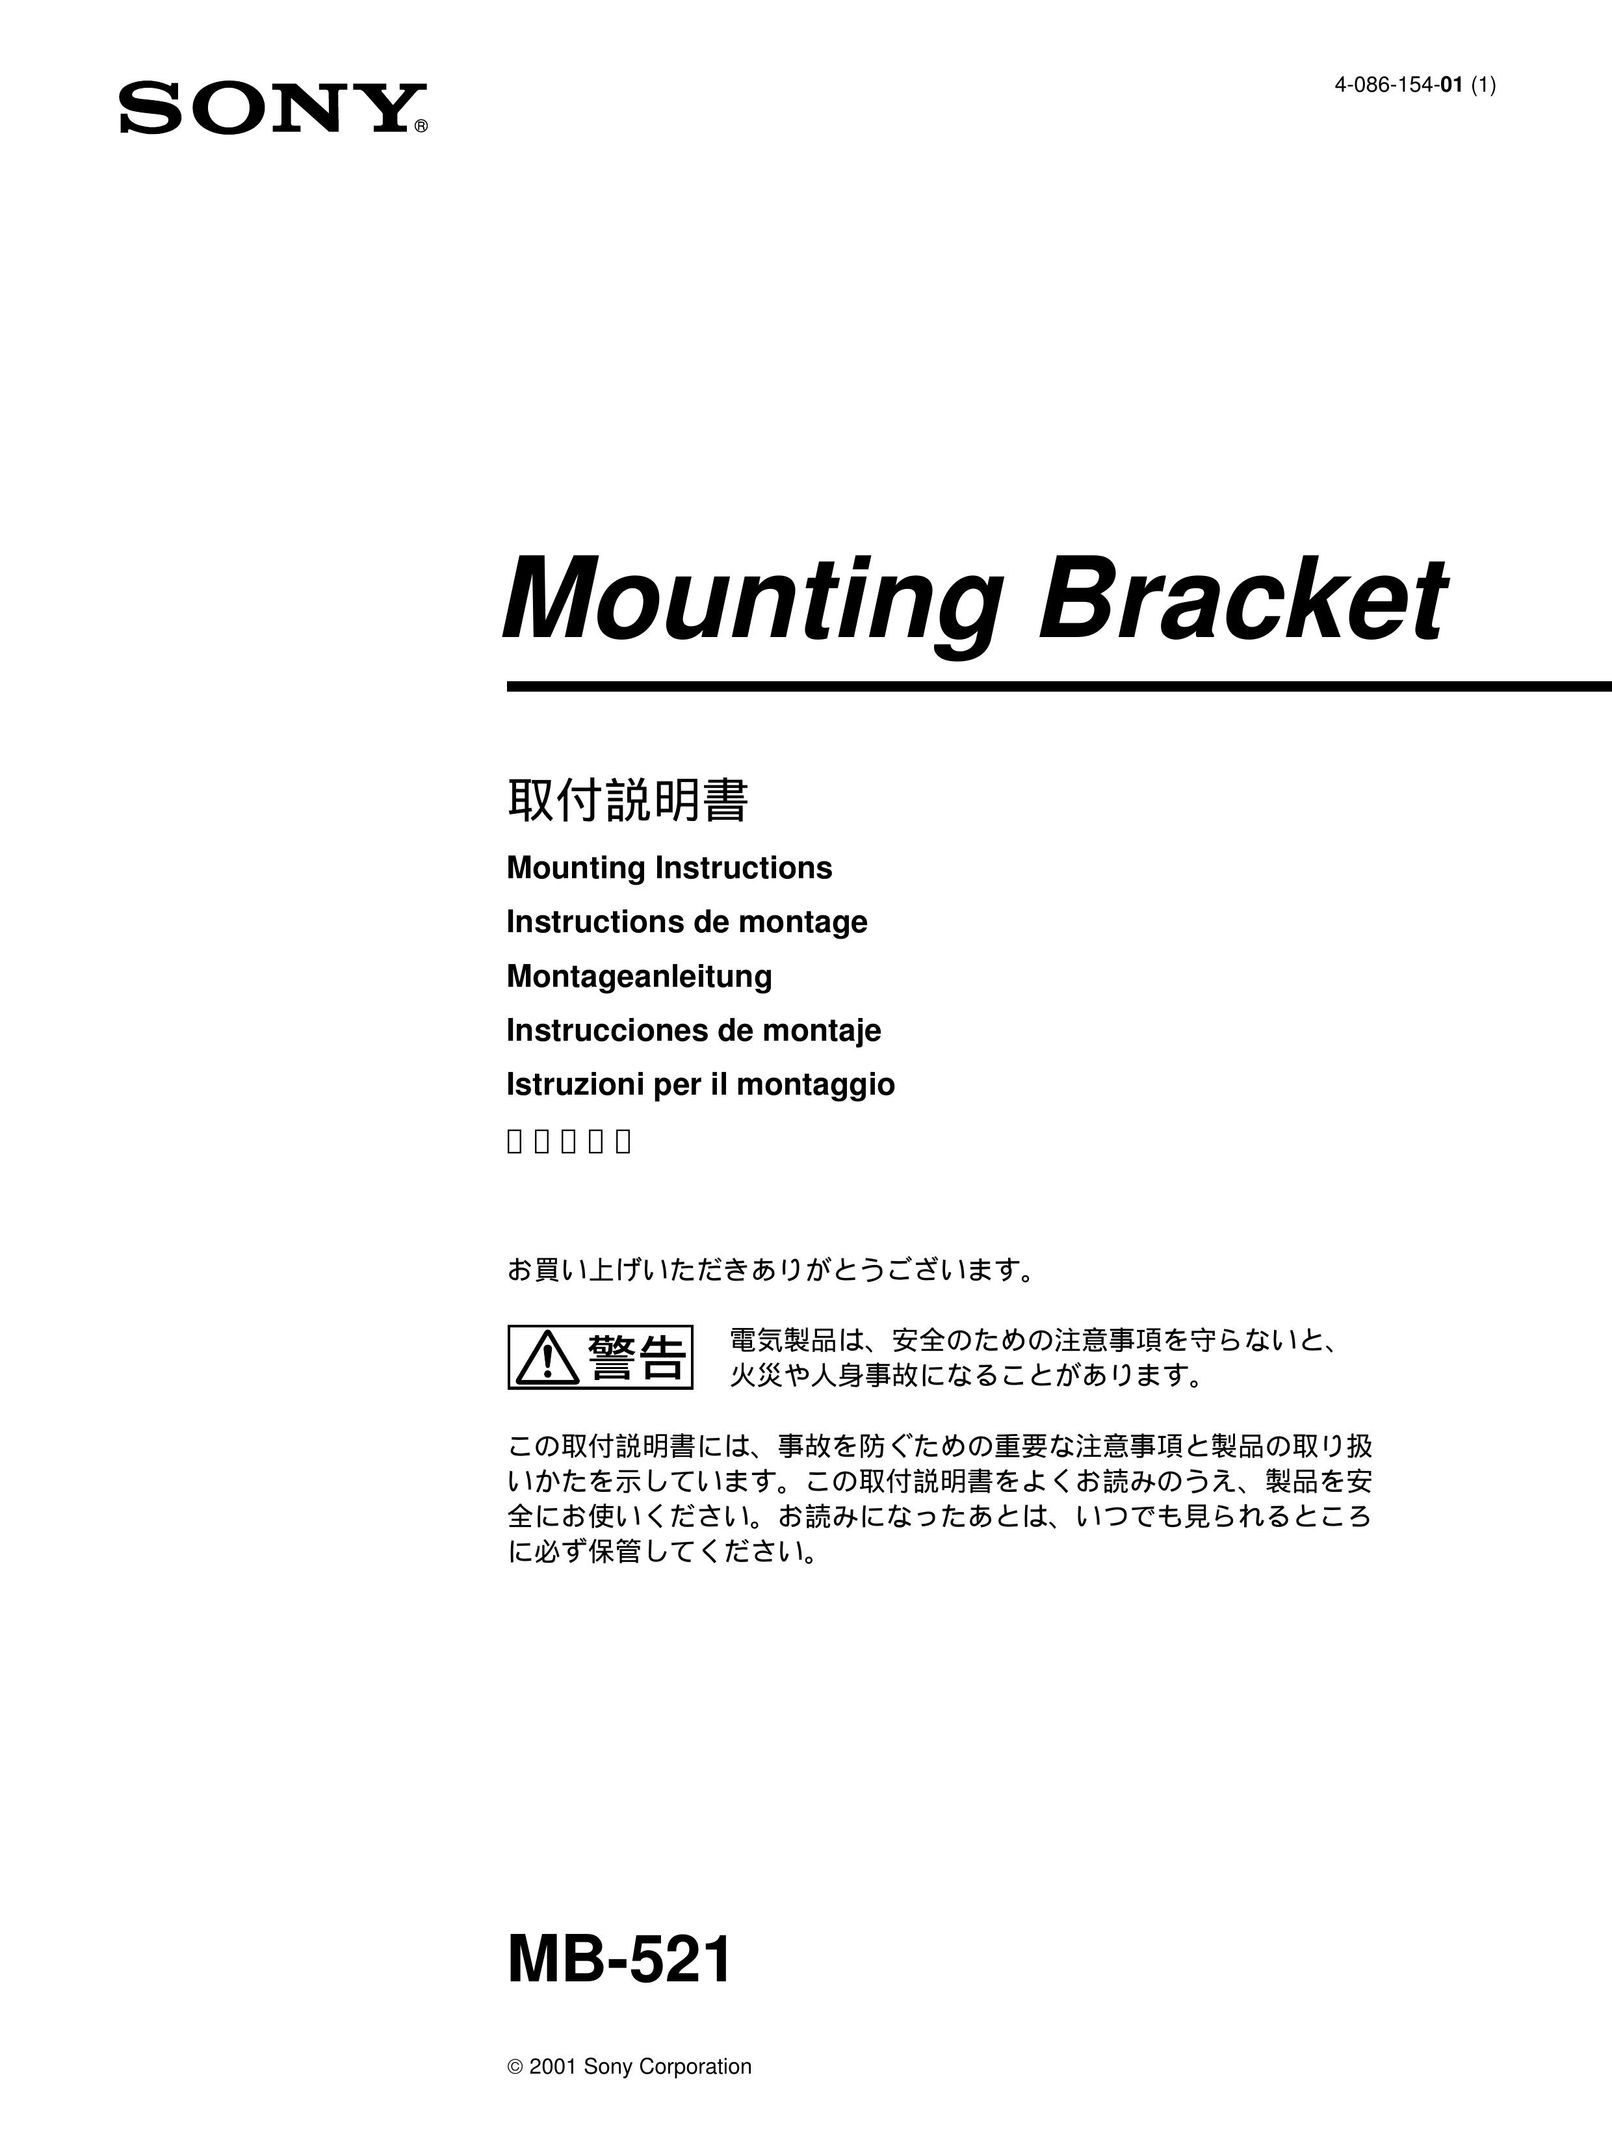 Sony MB-521 TV Mount User Manual